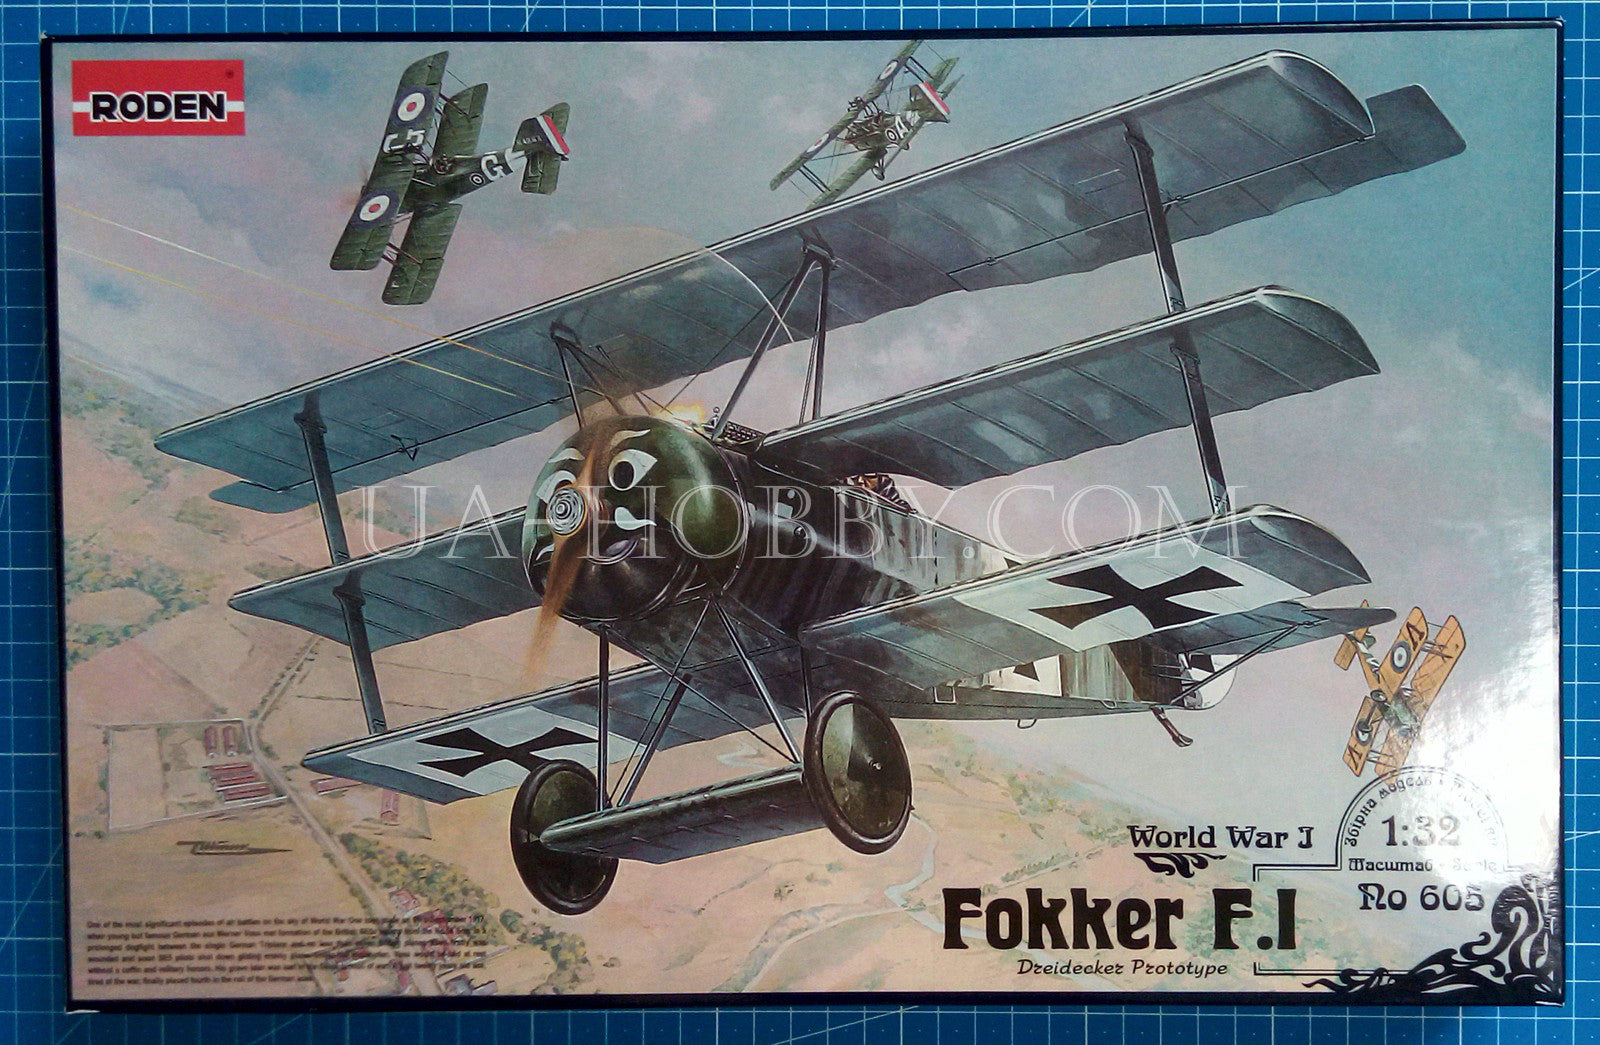 1/32 Fokker F.1. Roden 605